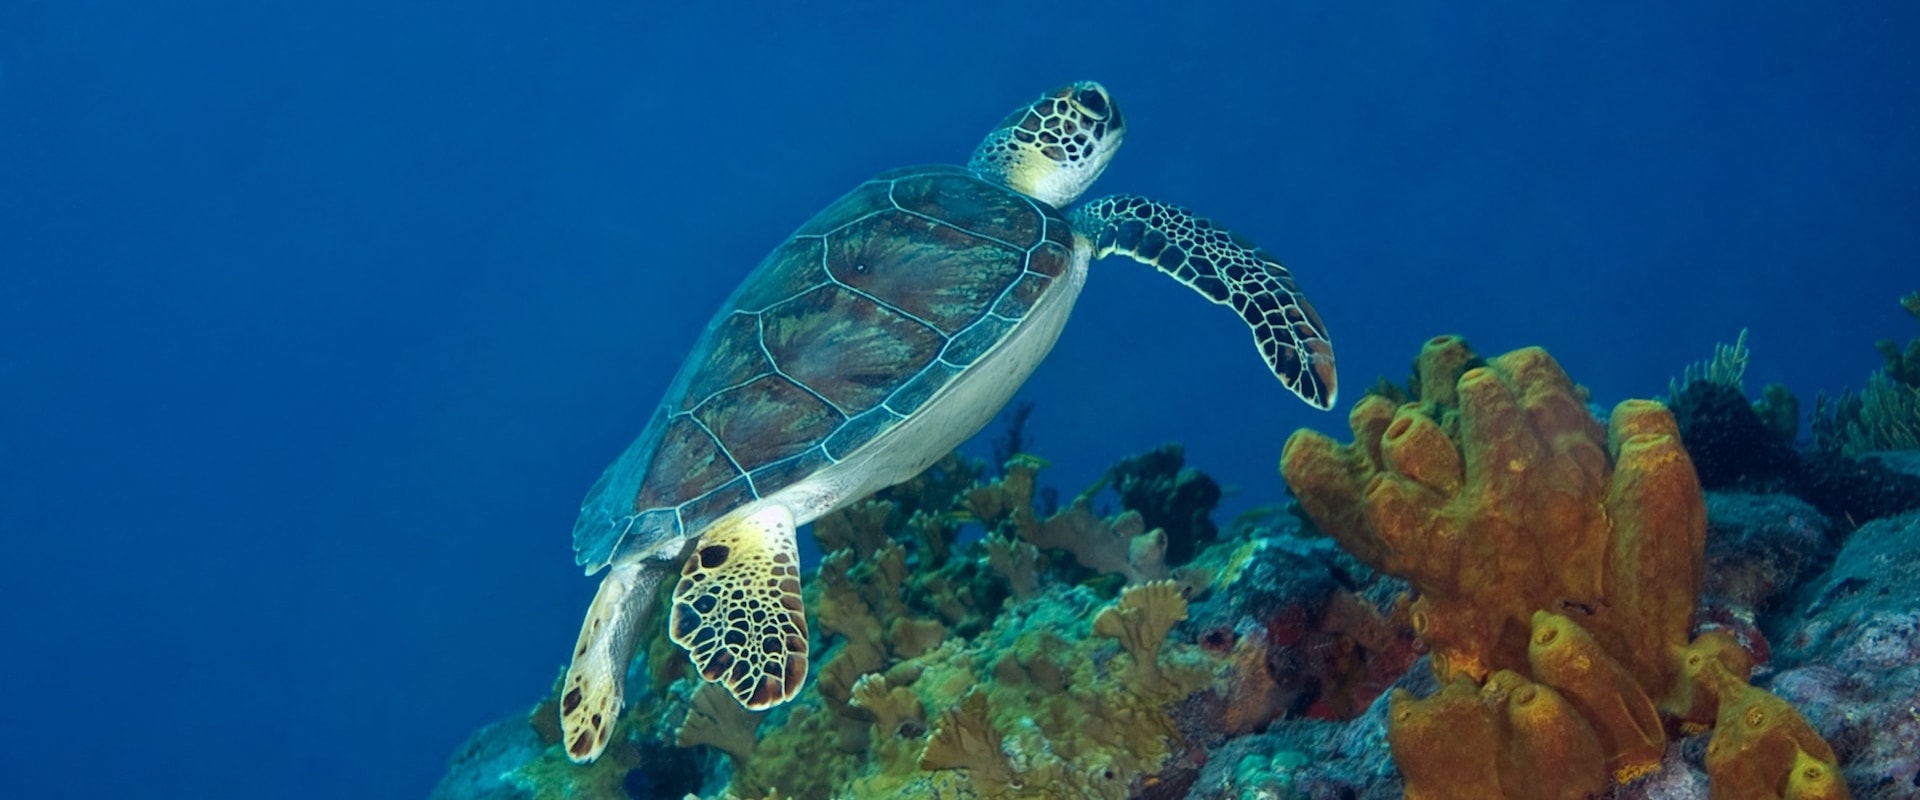 Snorkeling in St. Martin - Green Sea Turtles - Tintamarre 